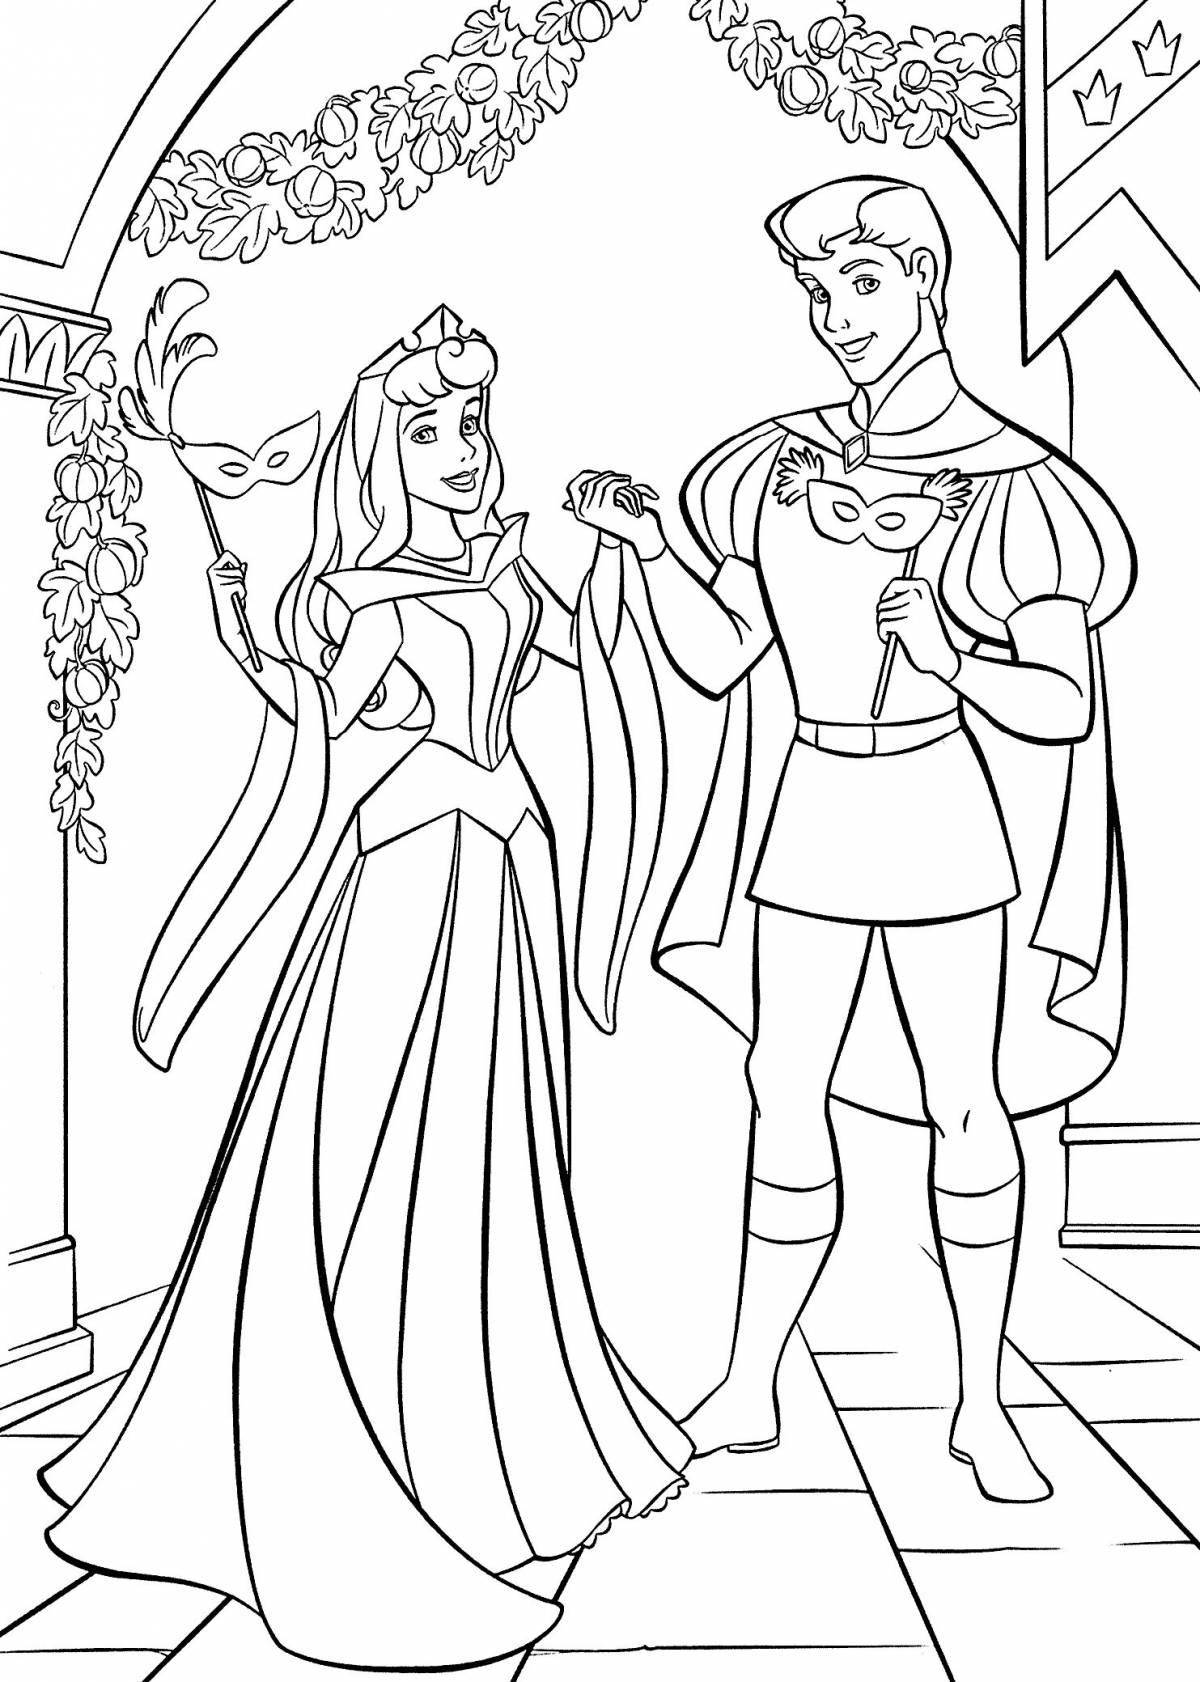 Fun princess and prince coloring book for kids